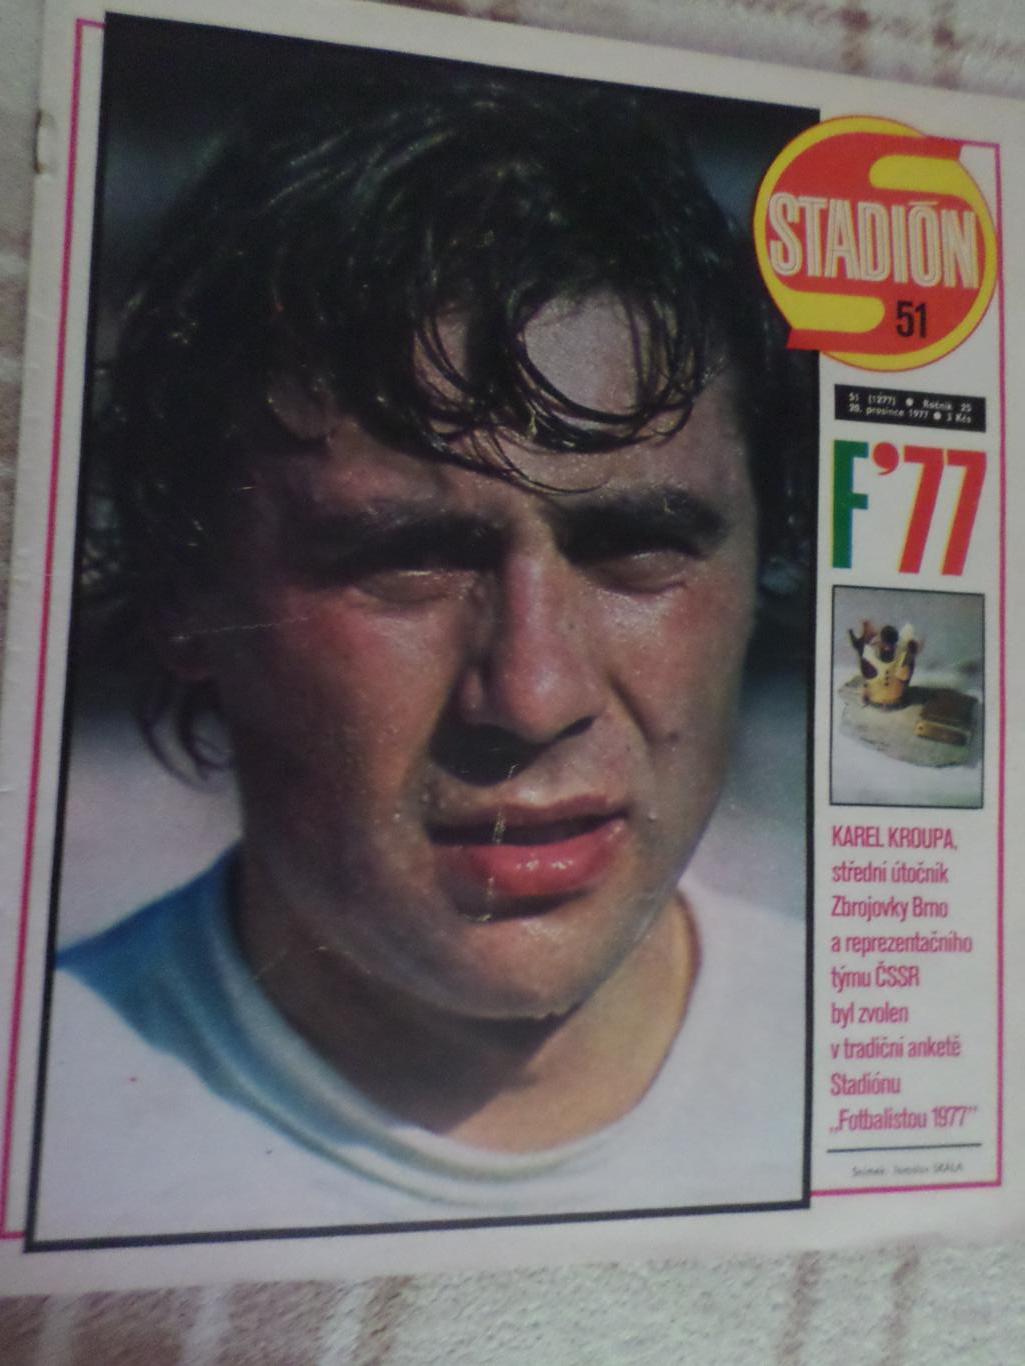 журнал Стадион Чехословакия № 51 1977 г постер Интер Милан Блохин